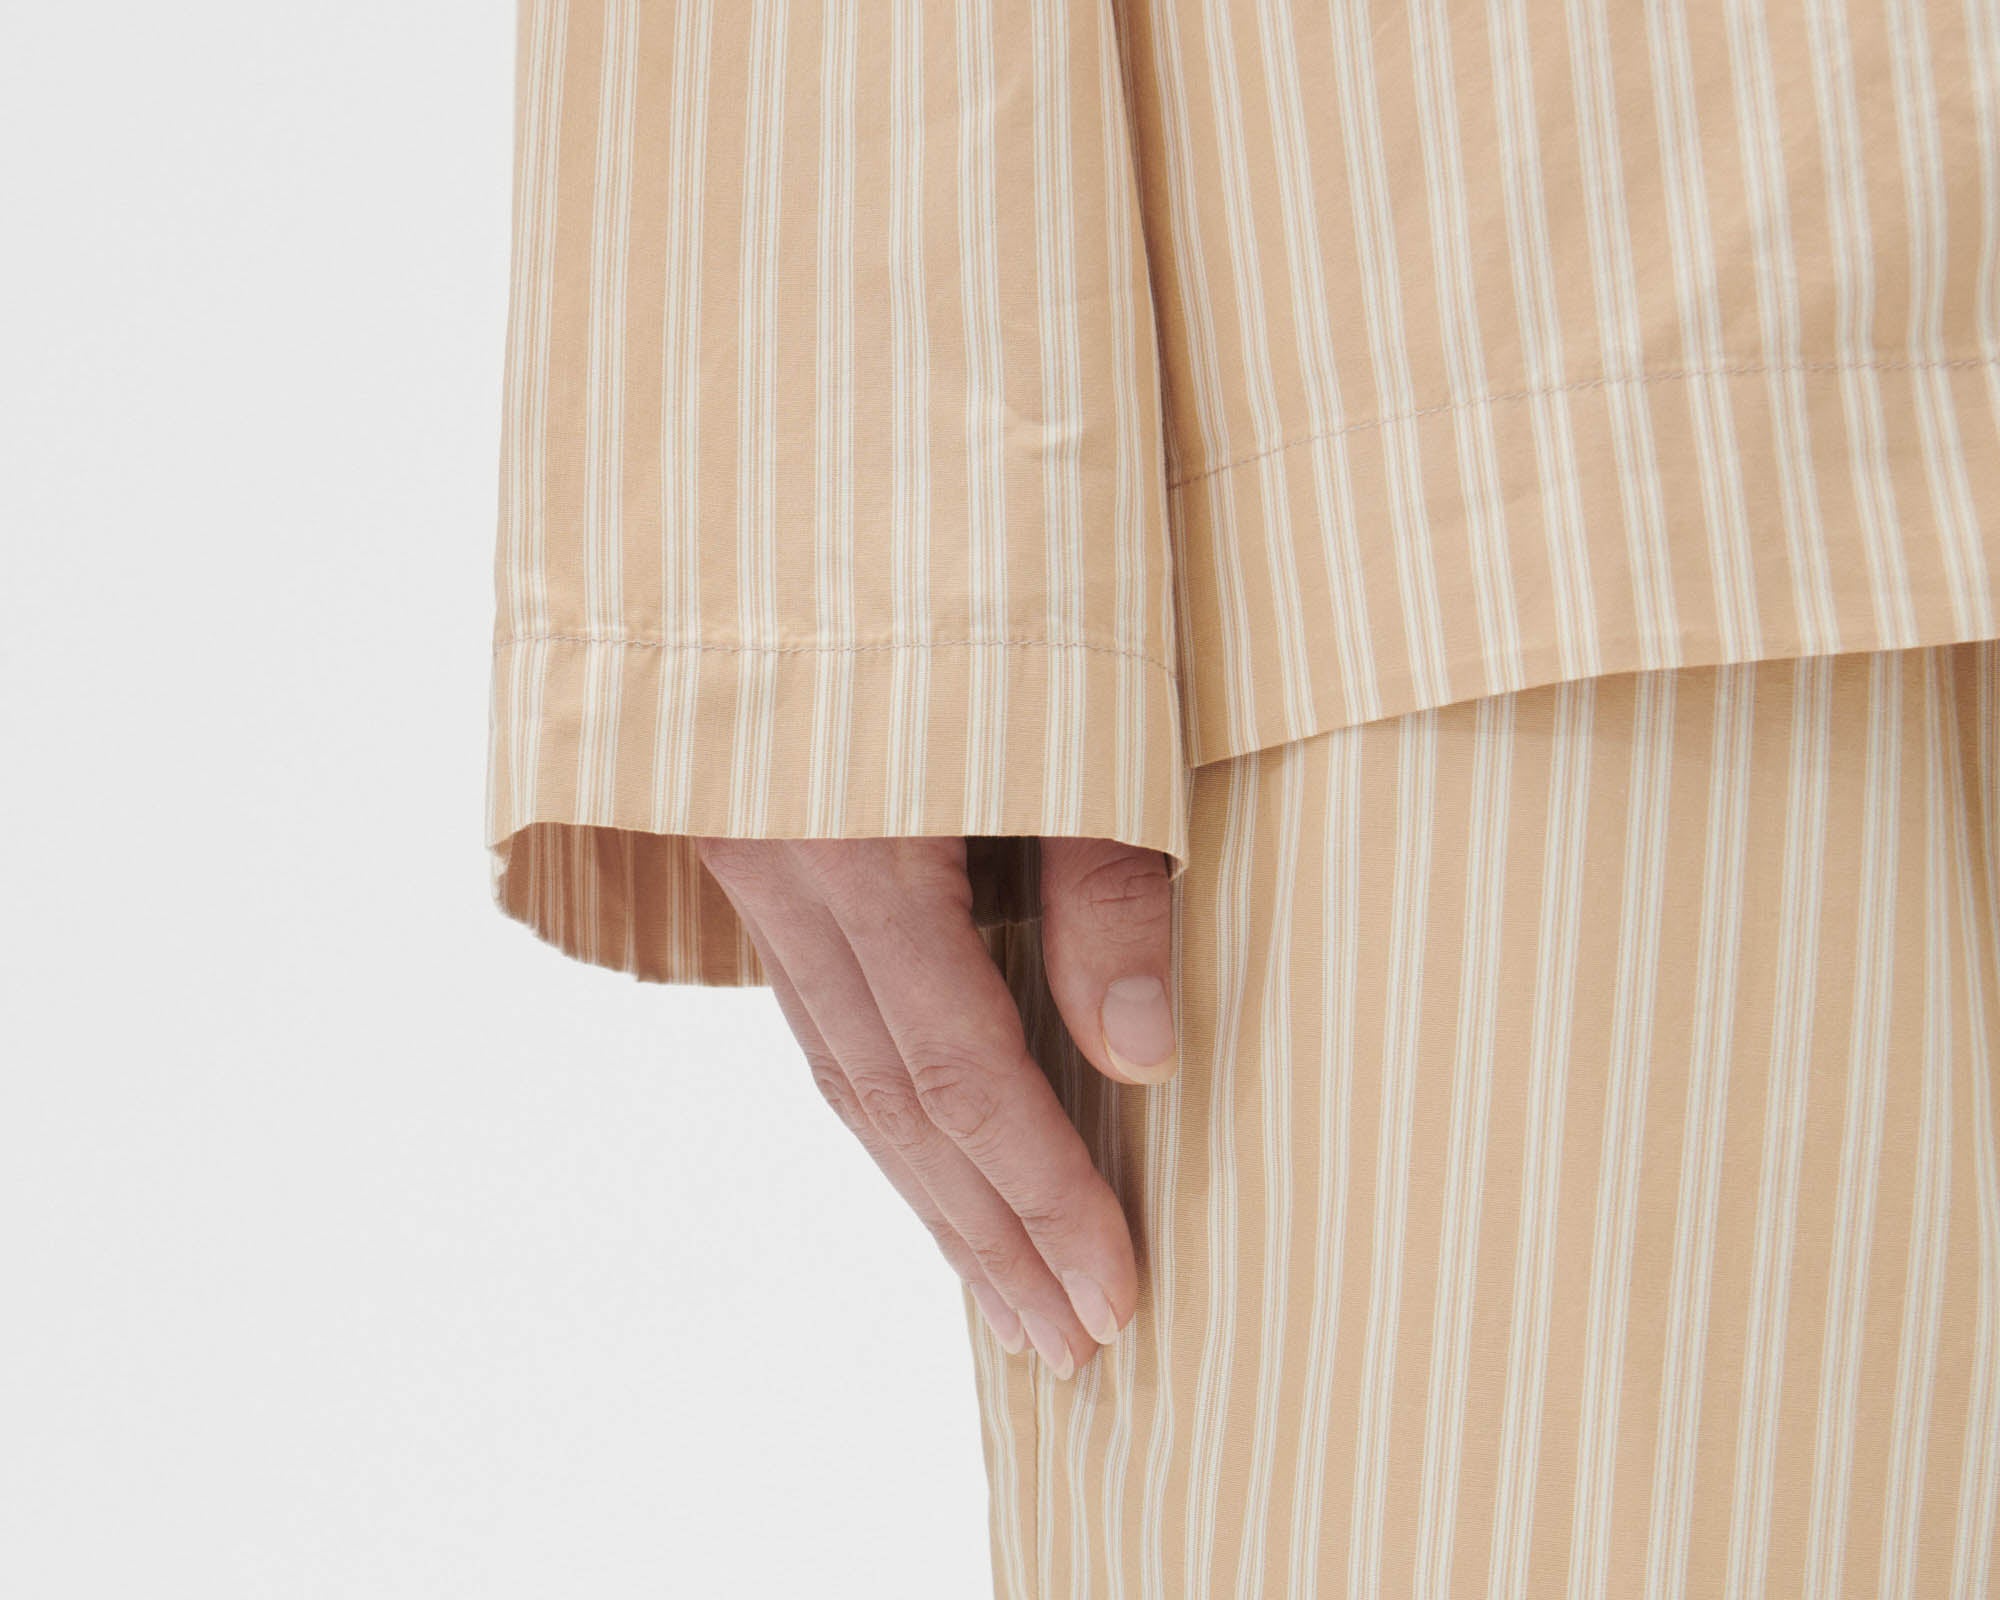 Tekla Poplin Long Sleeve Shirt - Corinth Stripes